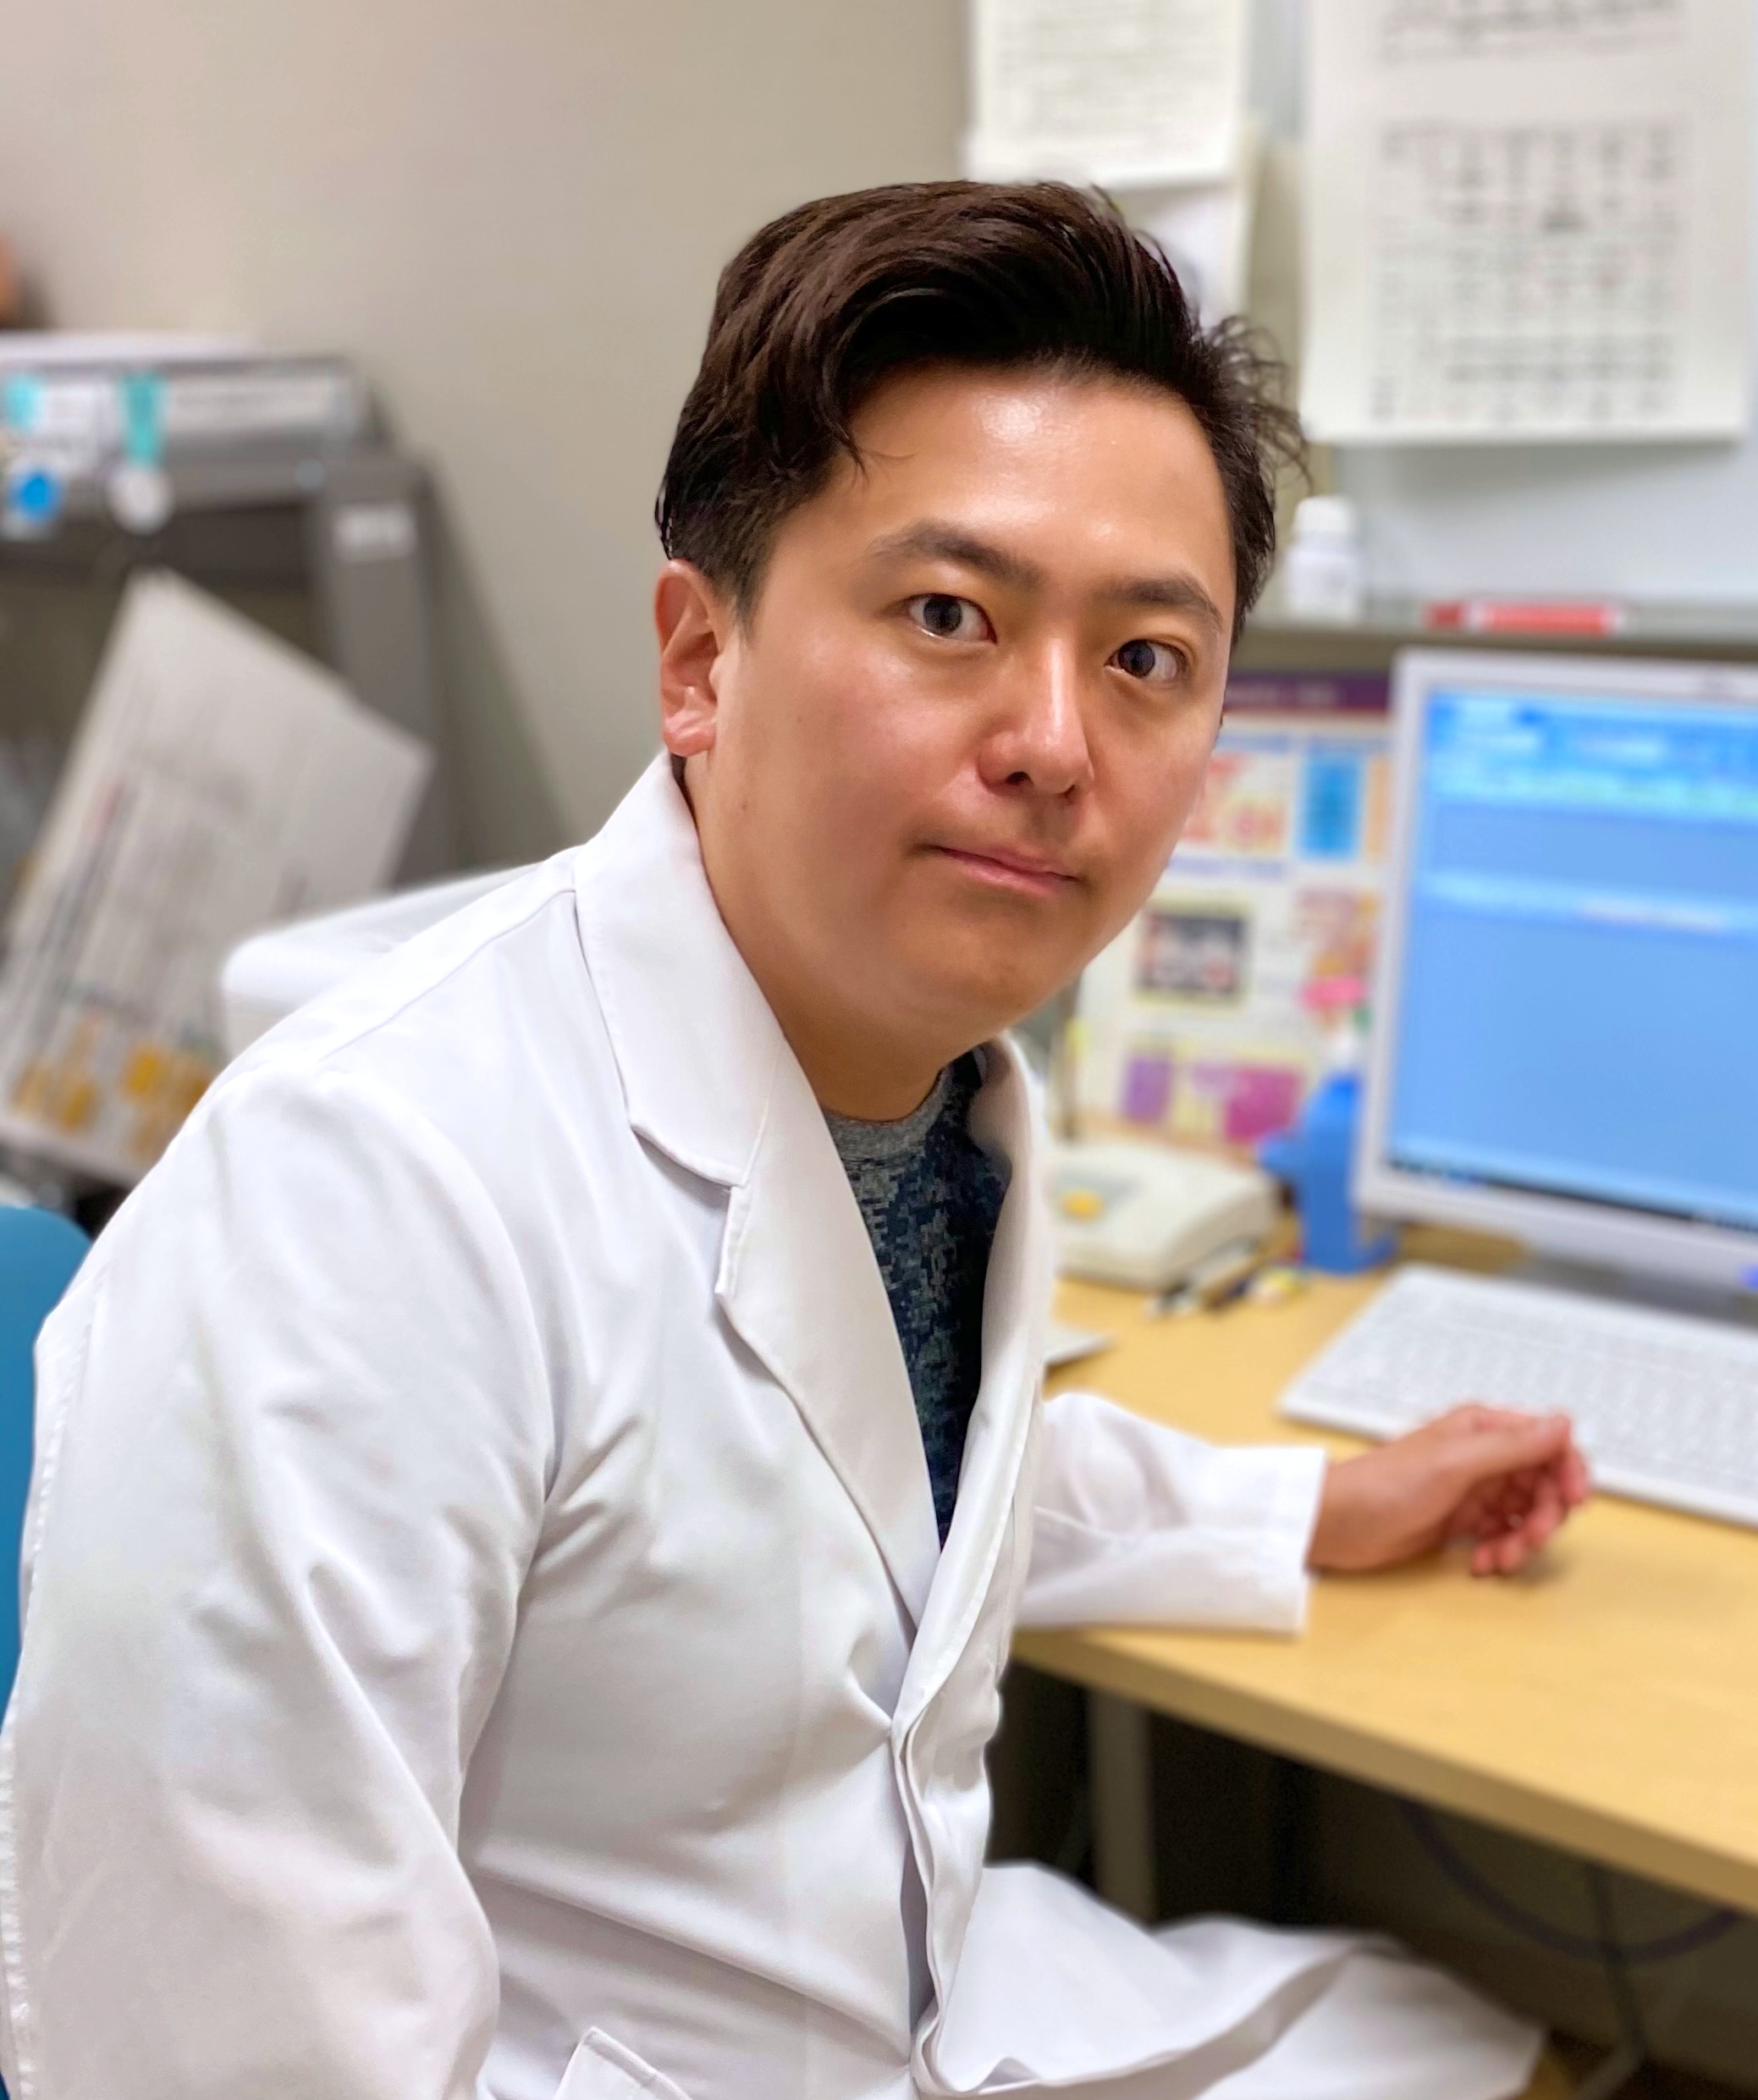 Dr. Komemushi